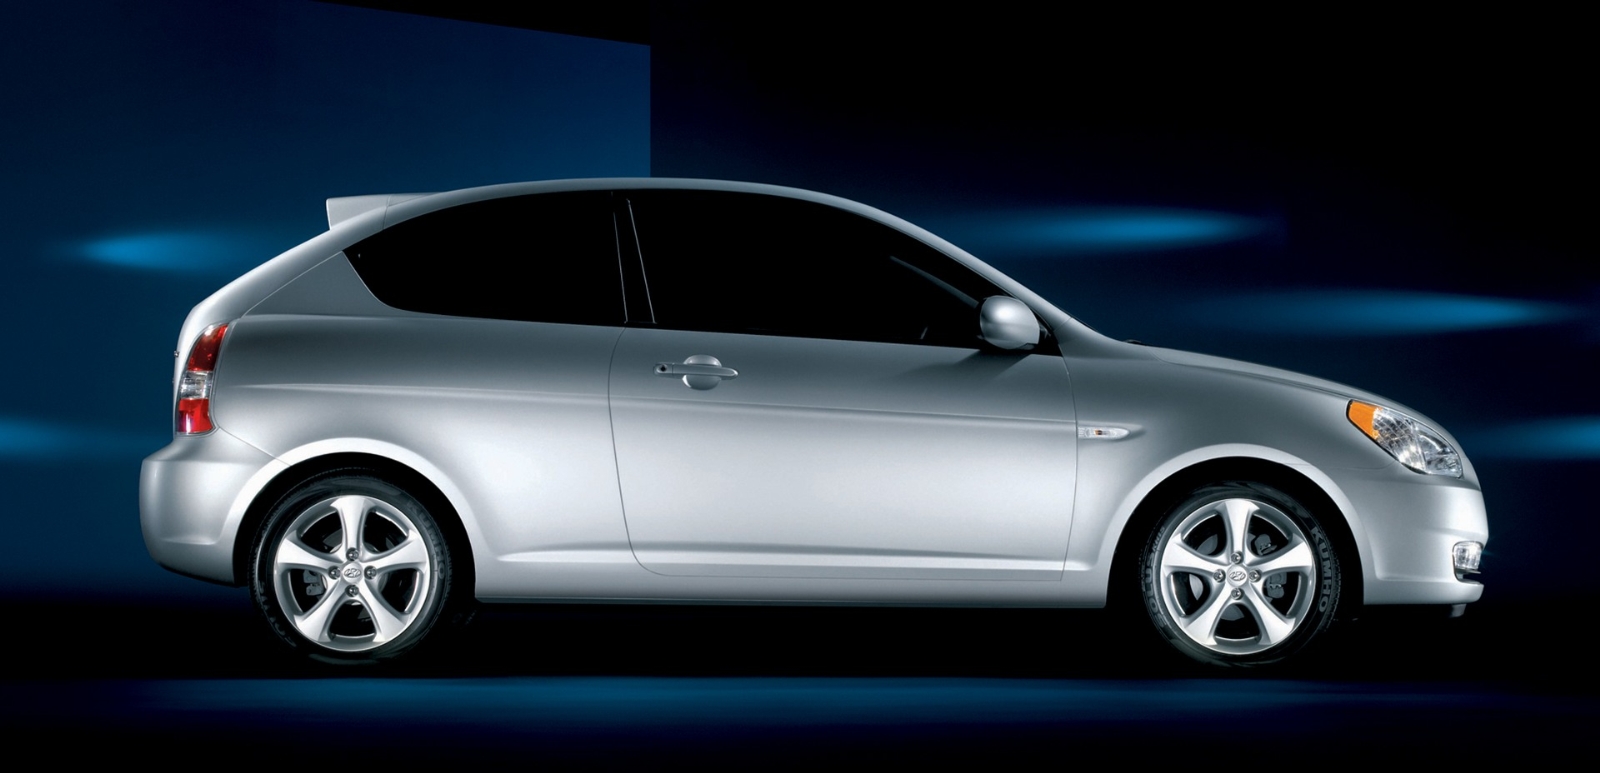 2008 Hyundai Accent